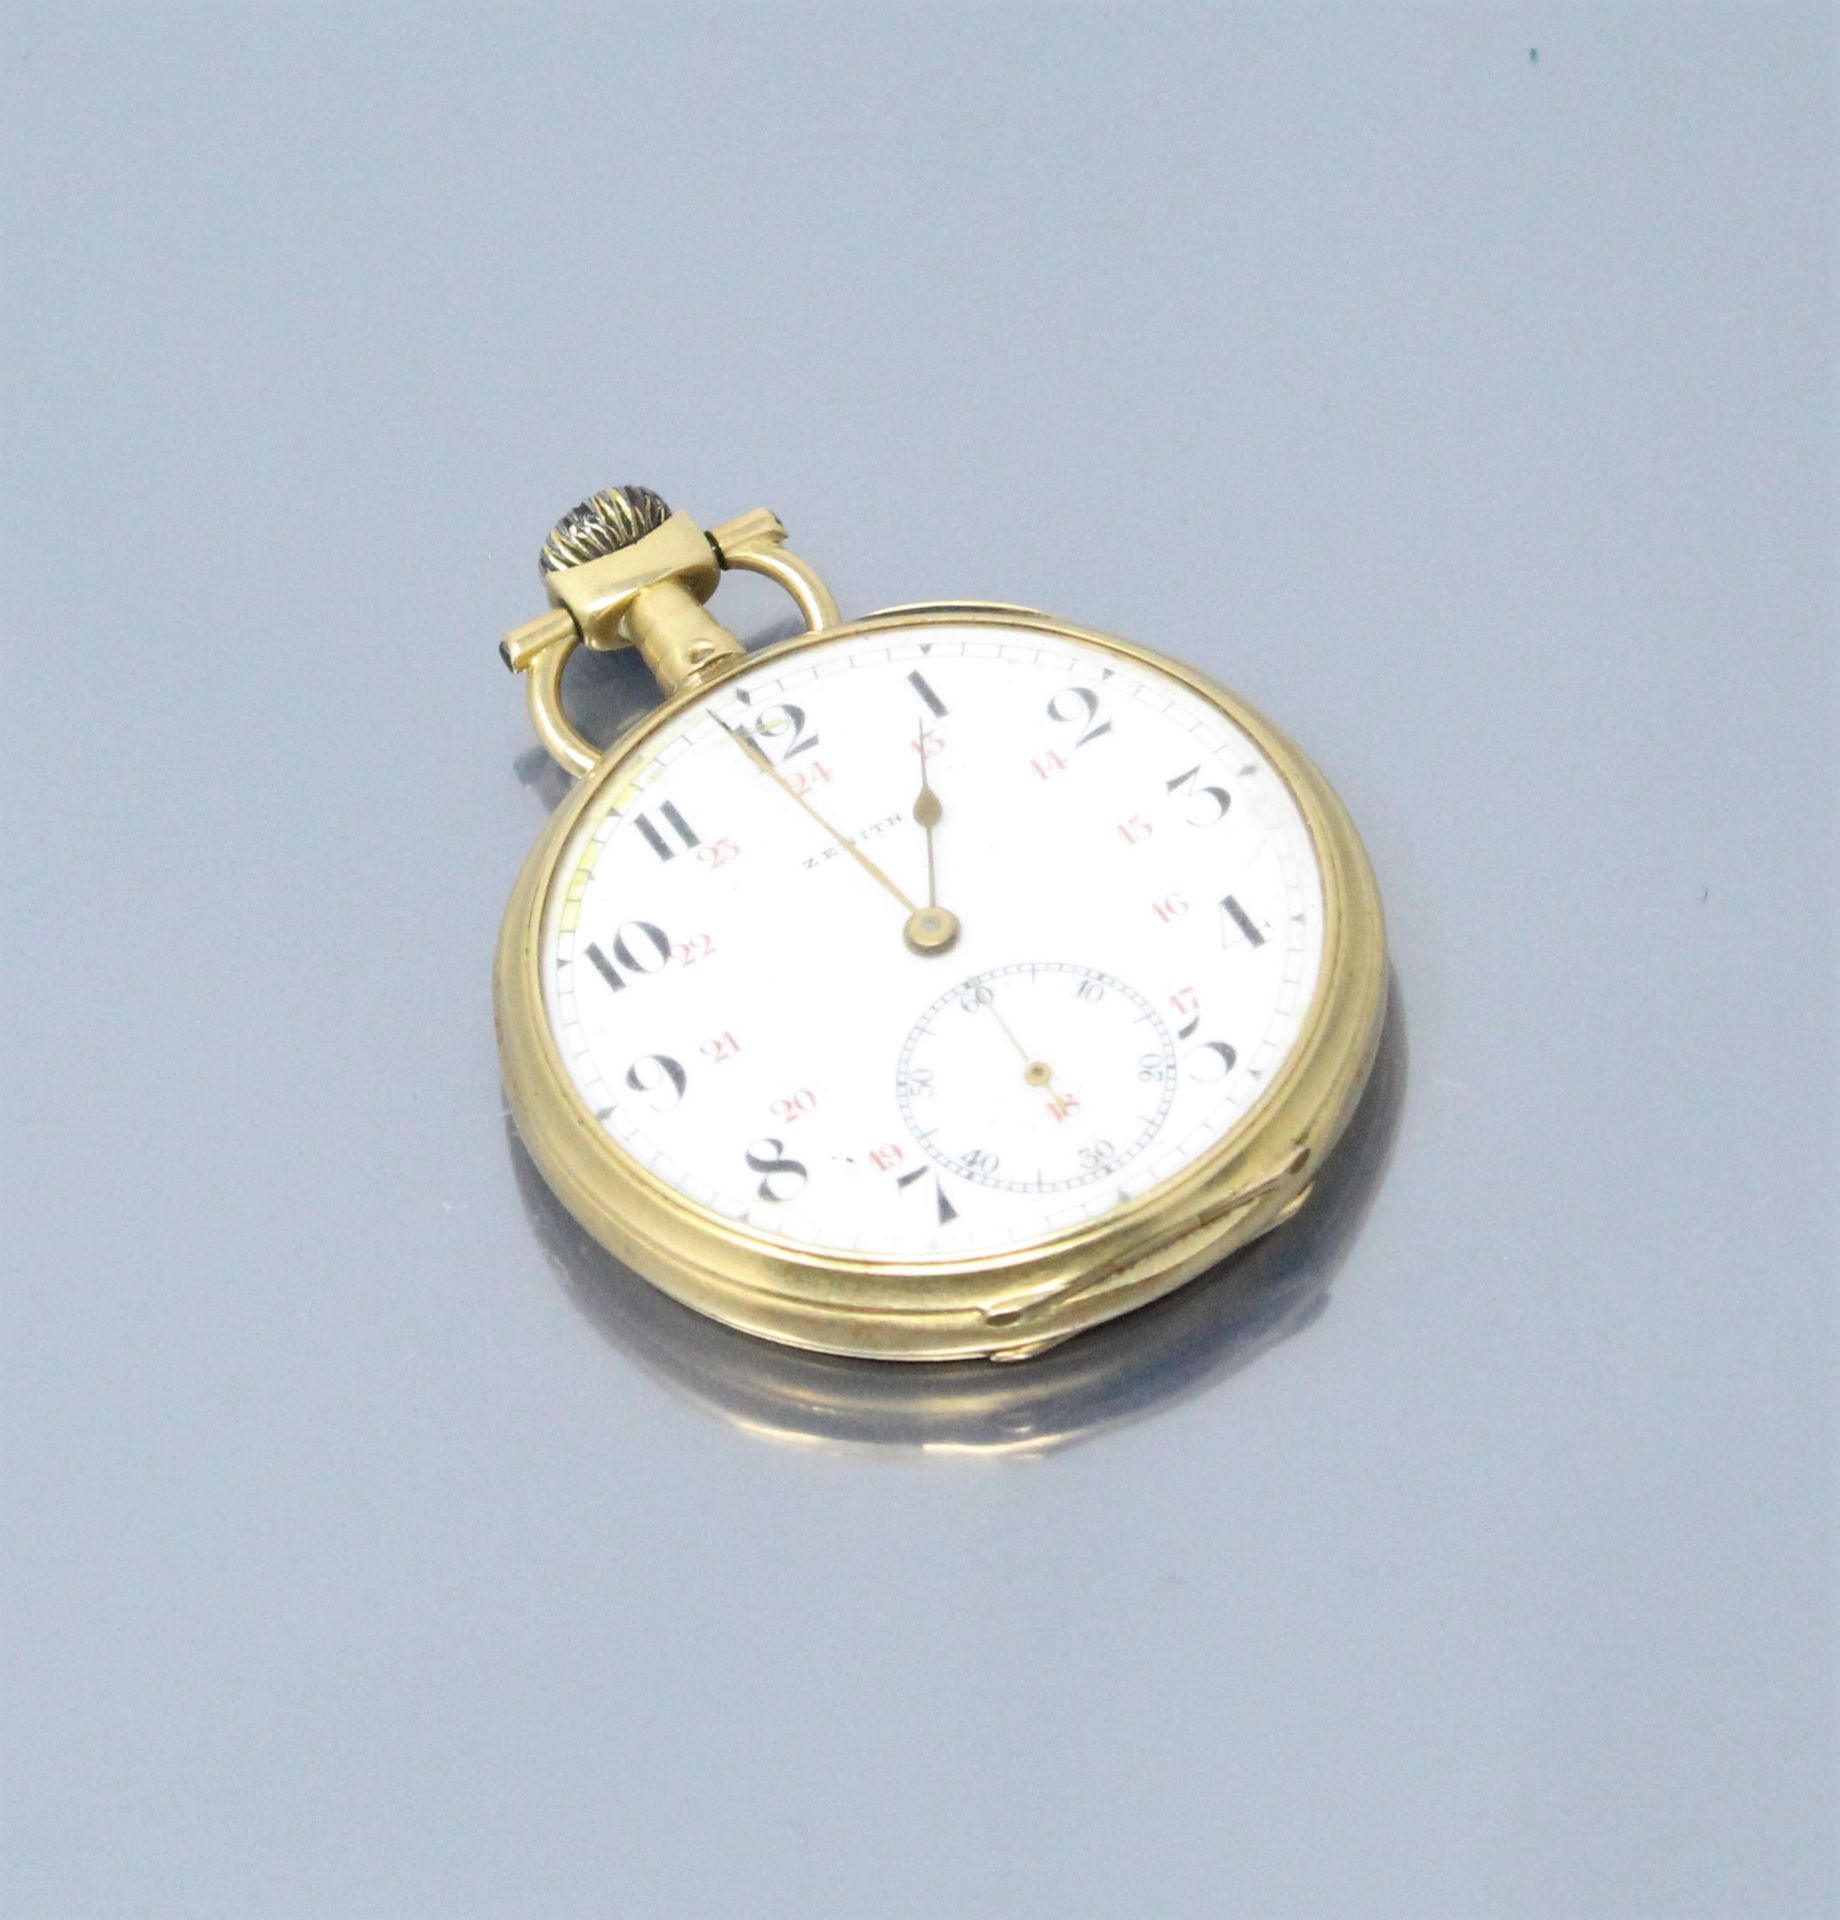 Null 泽尼特

18K(750)黄金怀表，白色珐琅背景表盘，阿拉伯数字小时和分钟。铁路和秒针位于6点钟方向。碗上有图案，双碗上有 "Grand prix P&hellip;